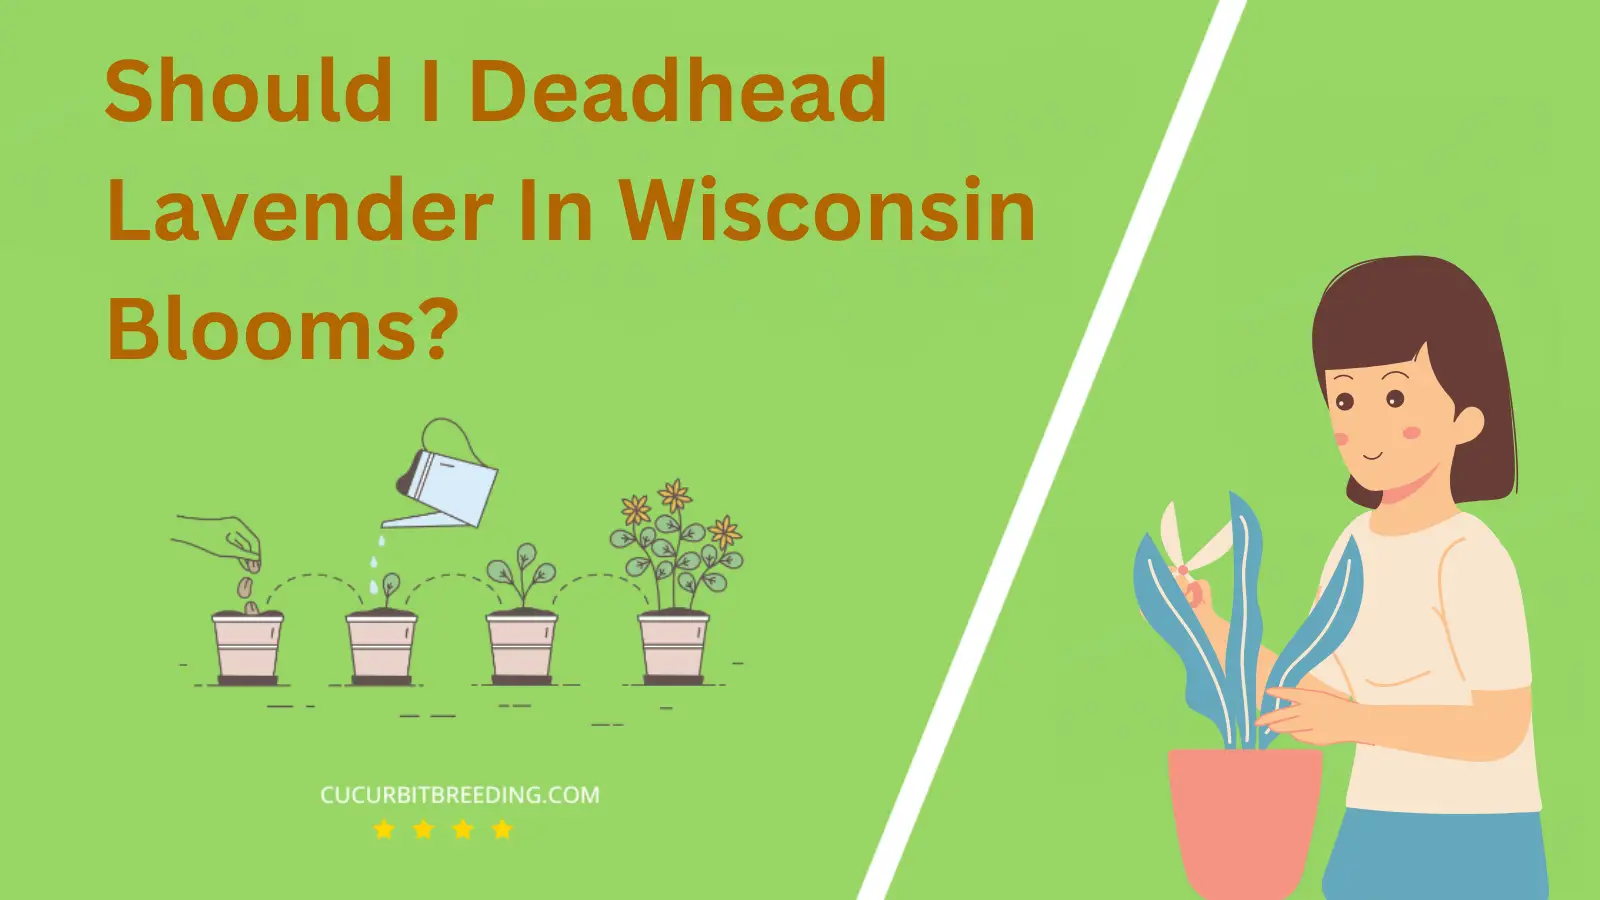 Should I Deadhead Lavender In Wisconsin Blooms?